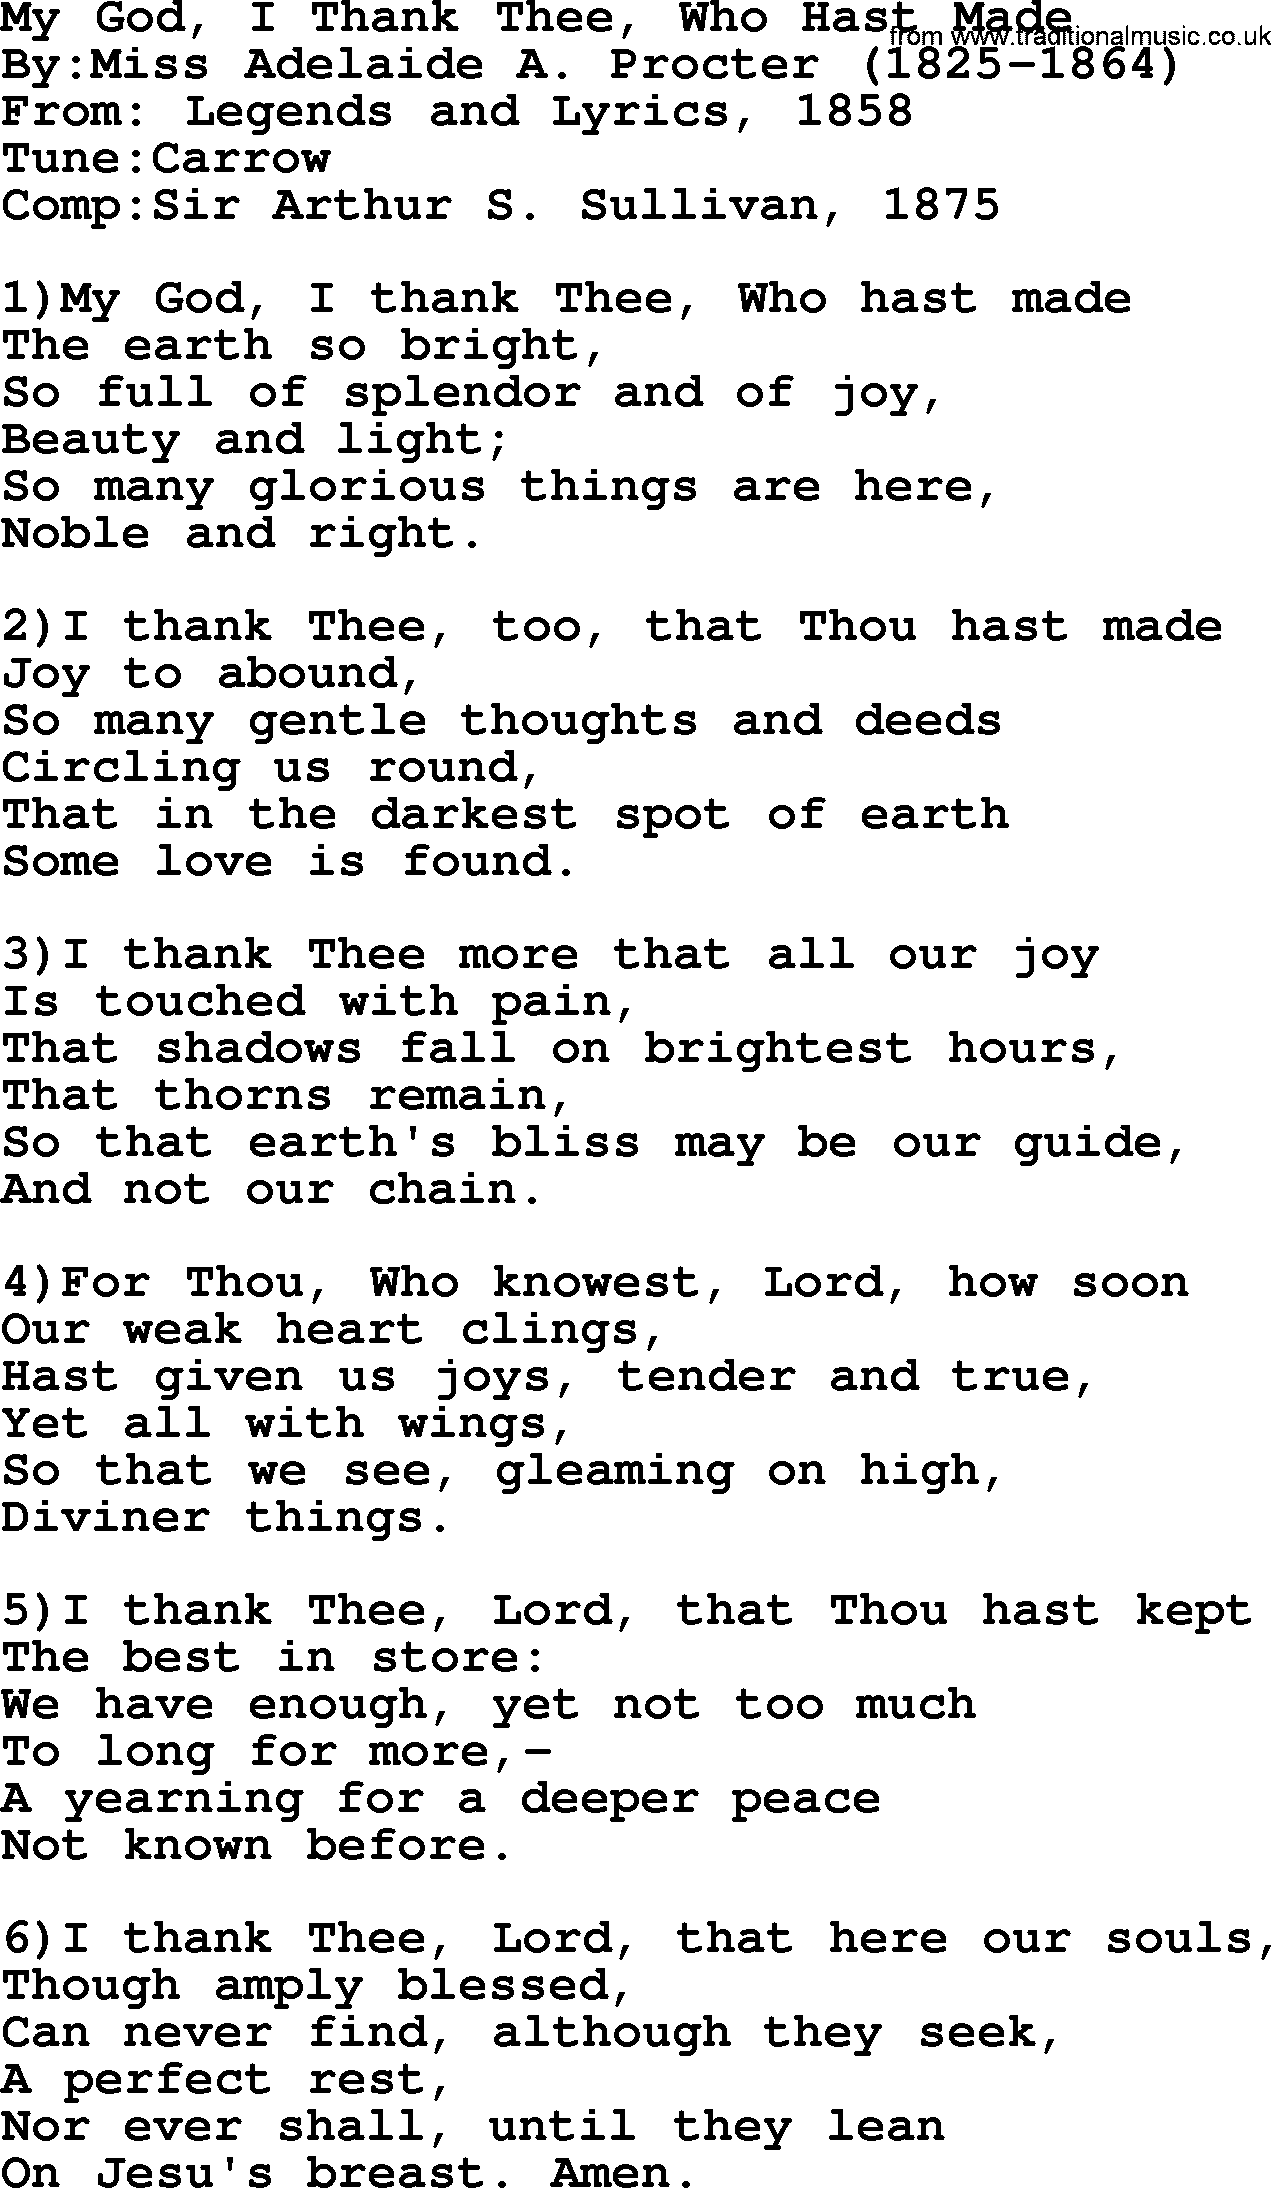 Methodist Hymn: My God, I Thank Thee, Who Hast Made, lyrics